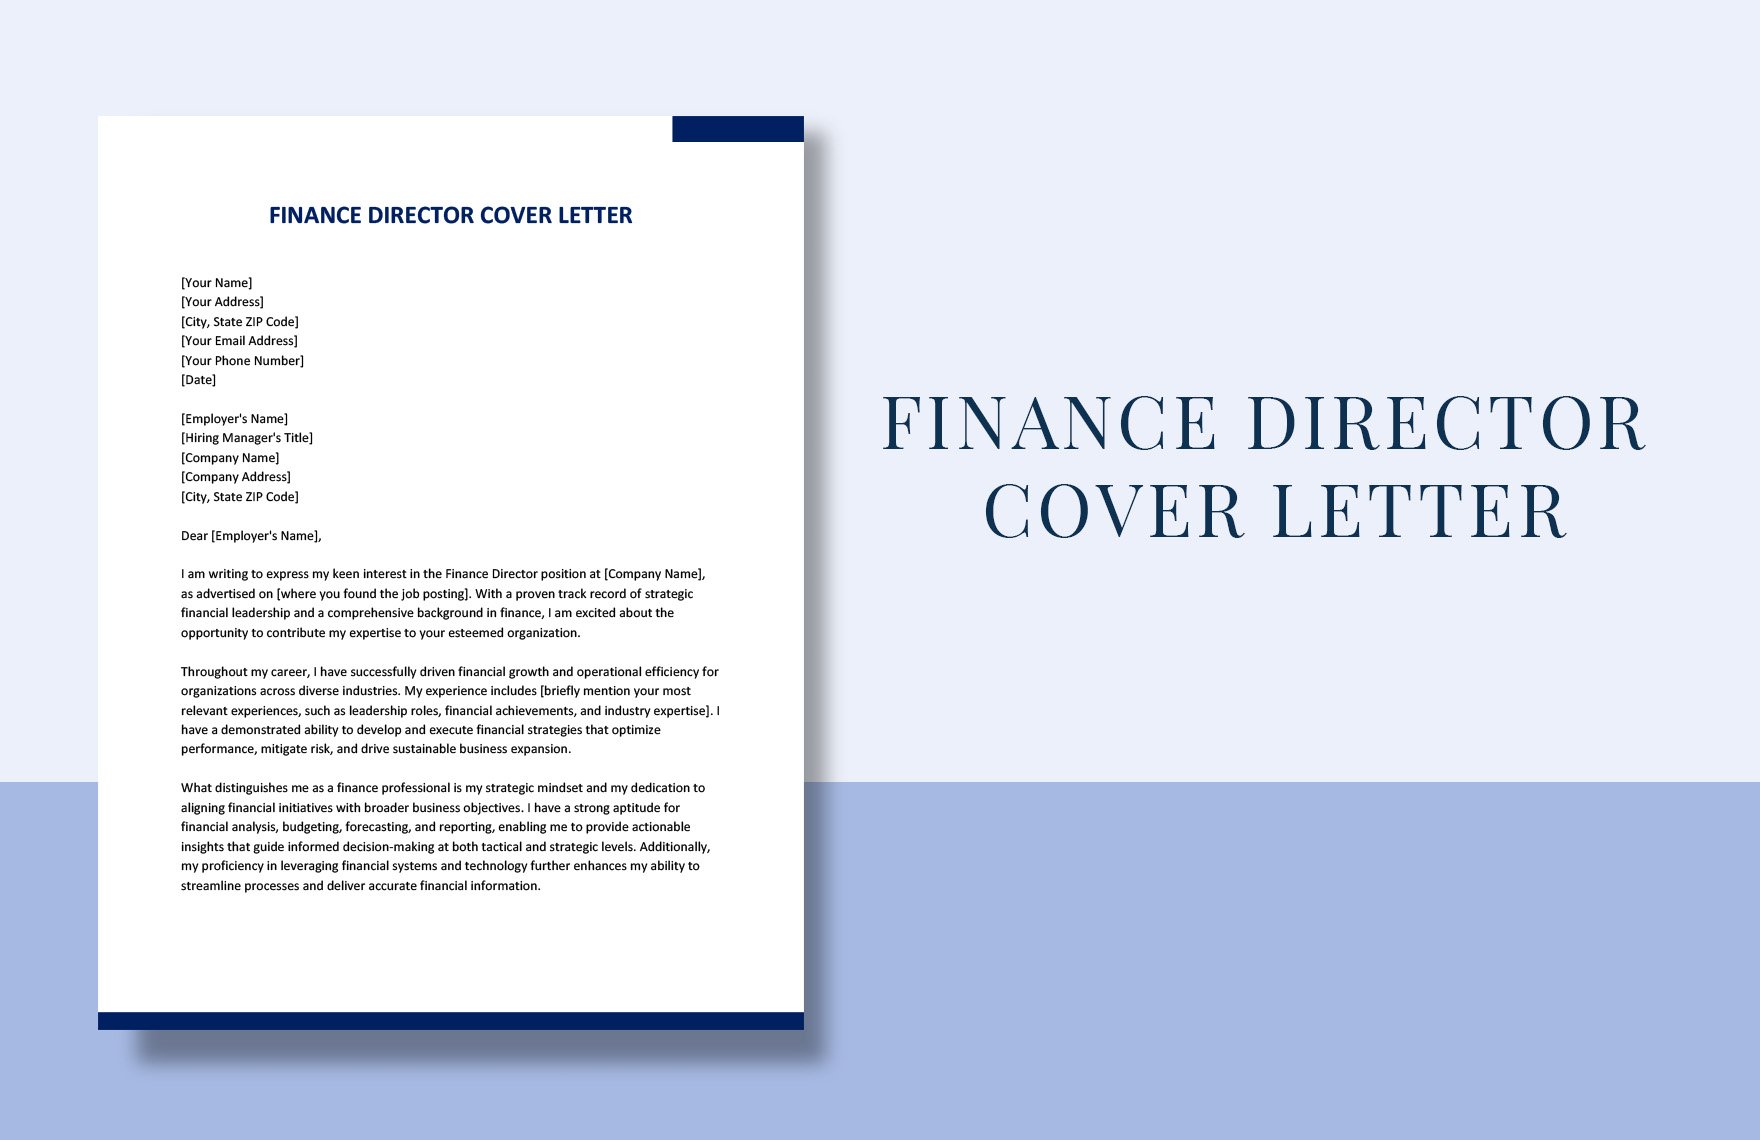 Finance Director Cover Letter